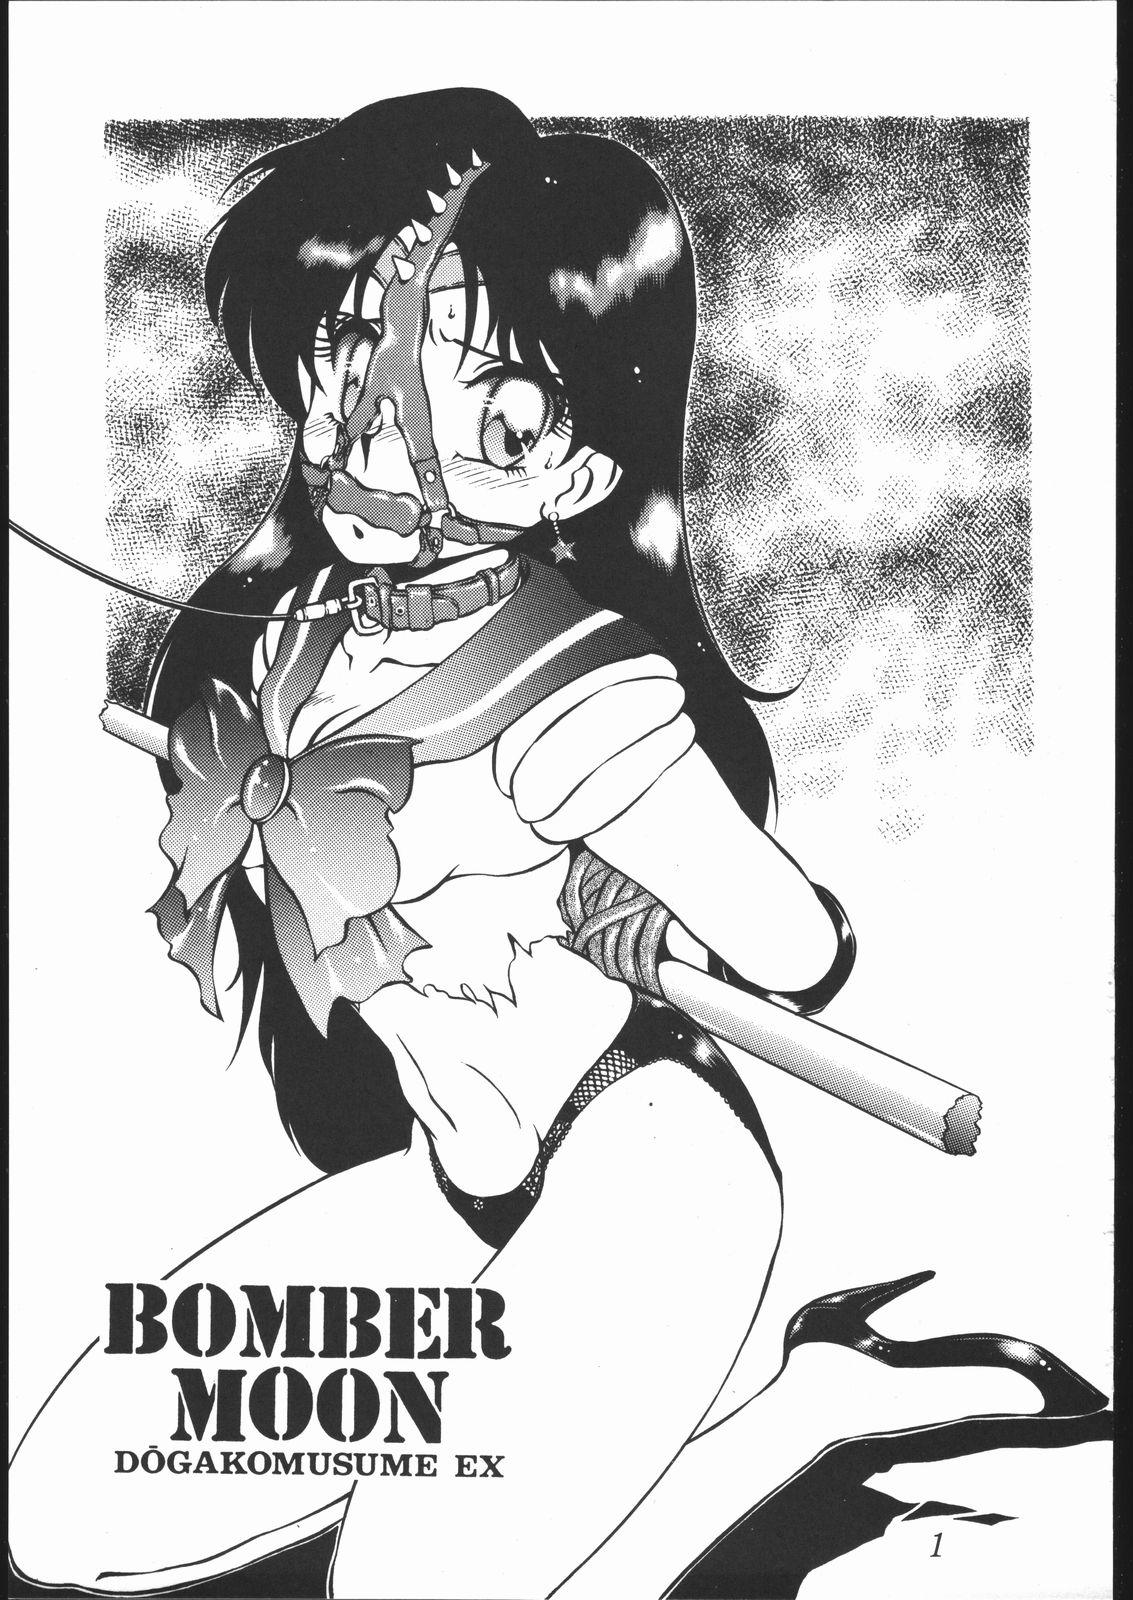 Muslim DOGAKOMUSUME EX BOMBER MOON - Sailor moon Cartoon - Page 2